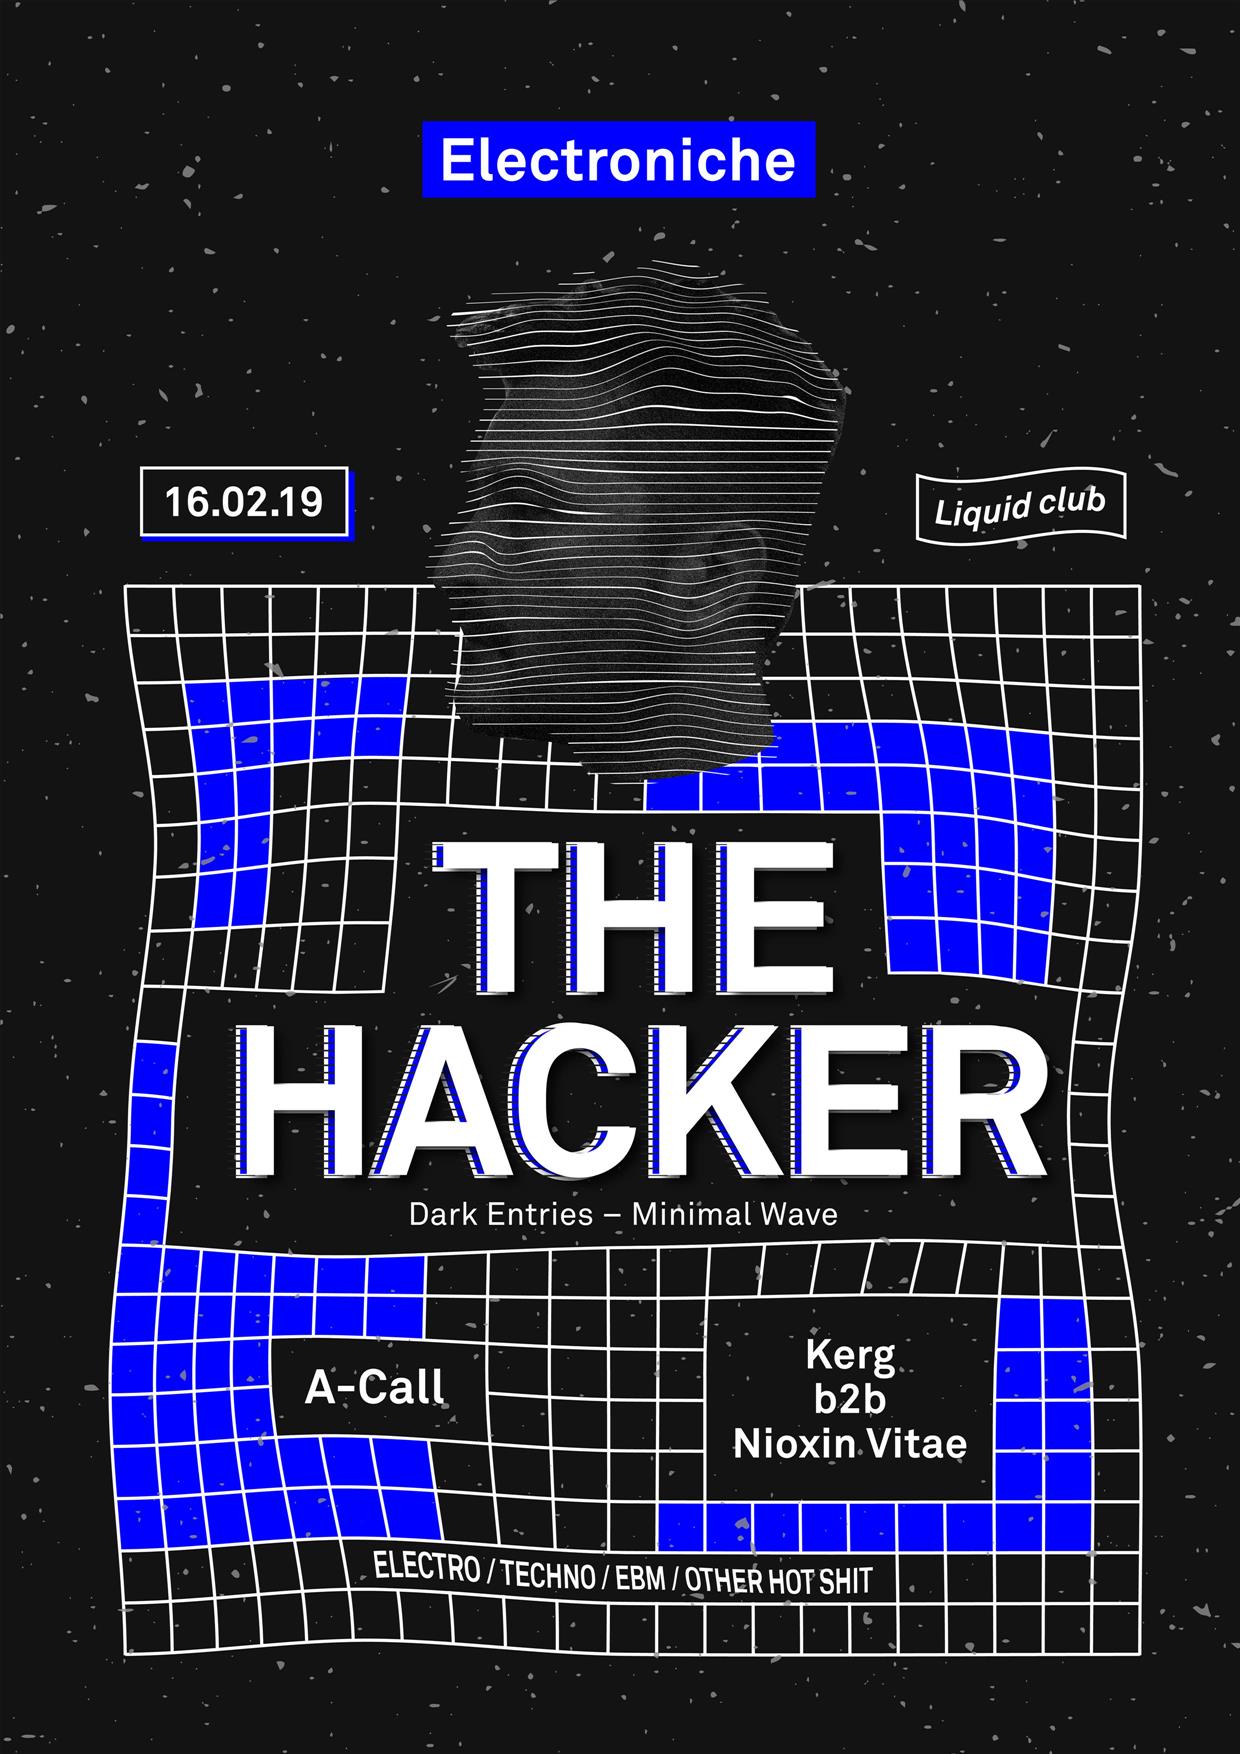 Electroniche feat. The Hacker / A-Call / Kerg b2b Nioxin Vitae poster